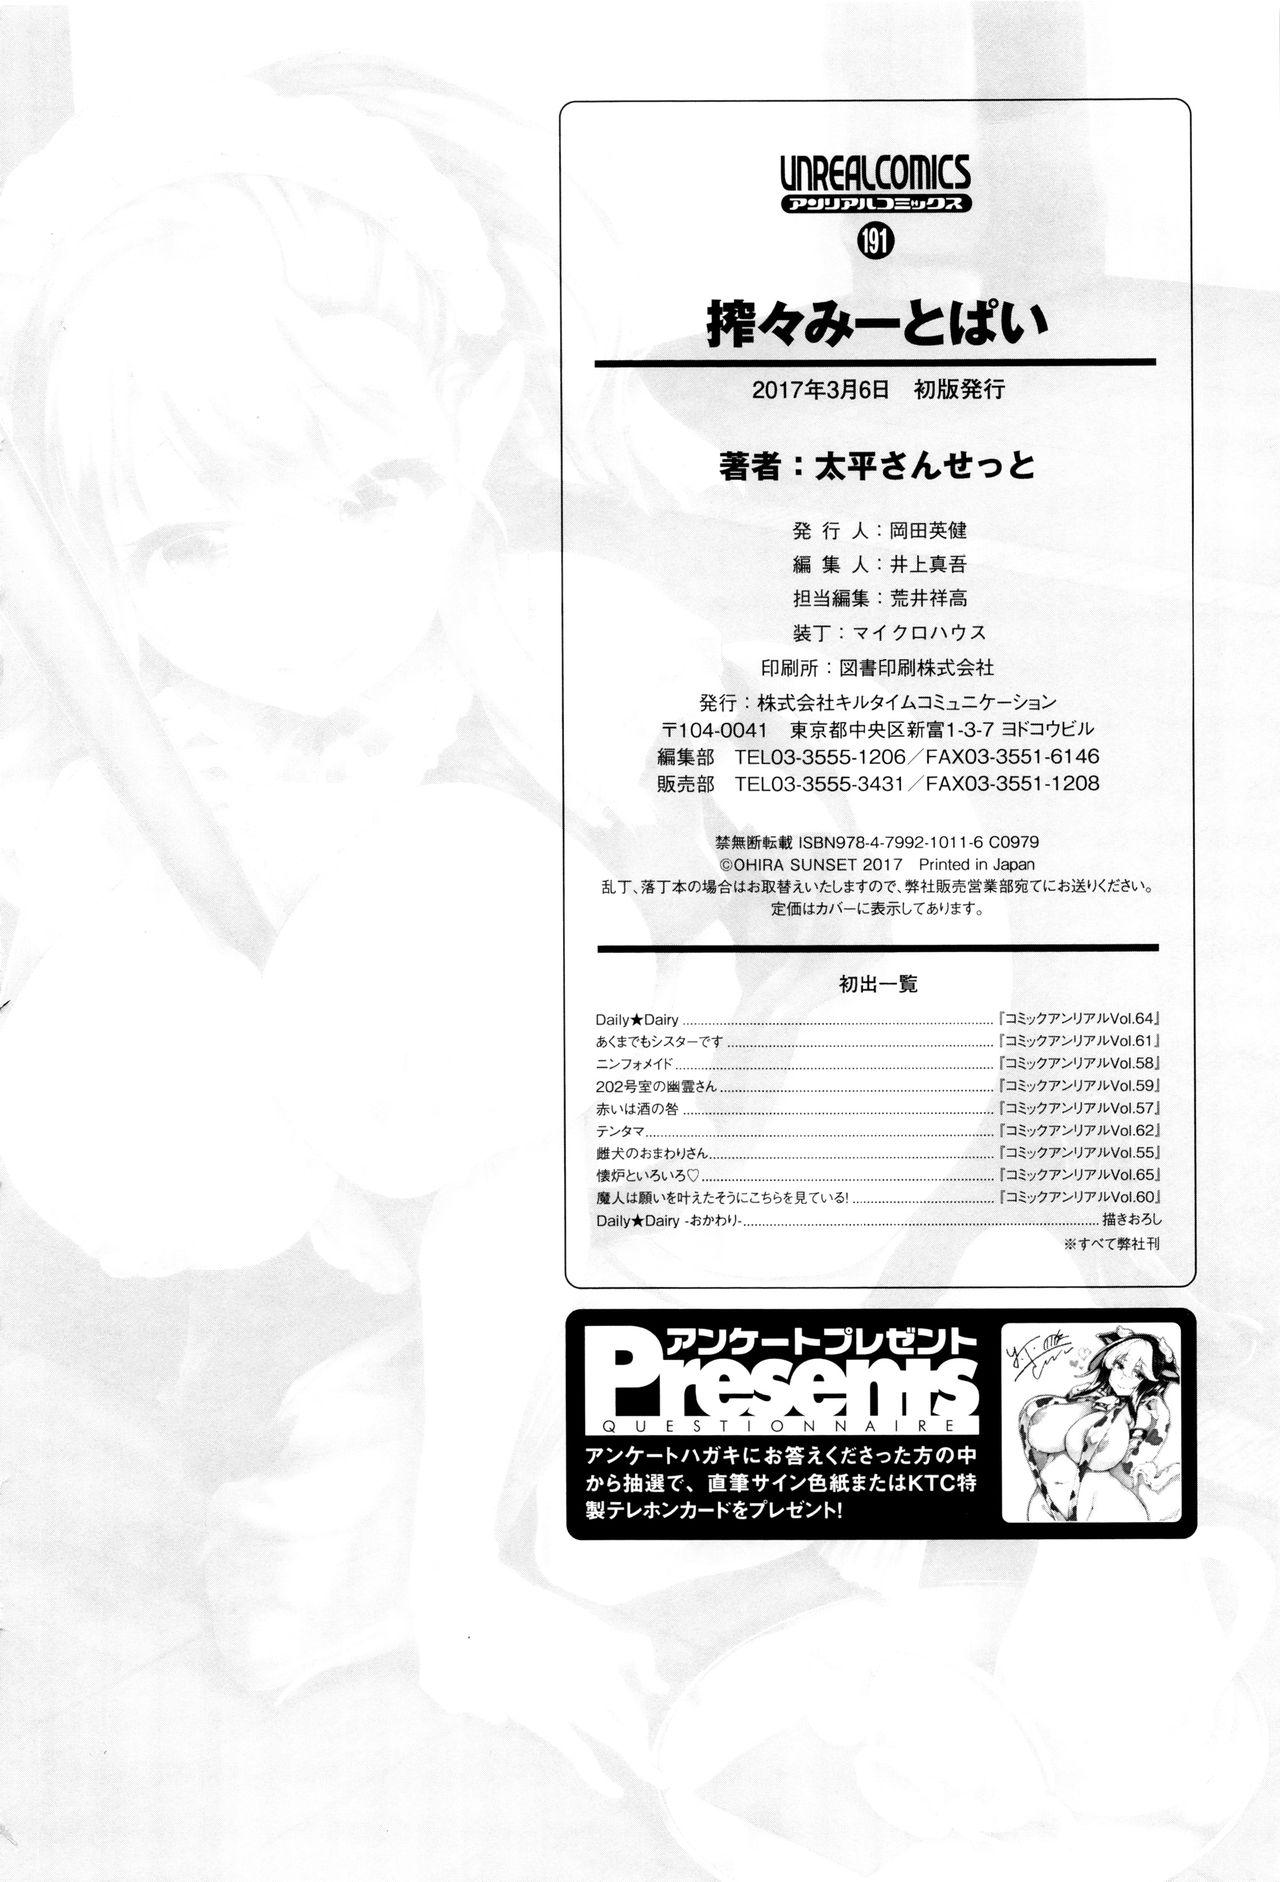 Sakusaku Meat Pie + Melonbooks leaflet 182